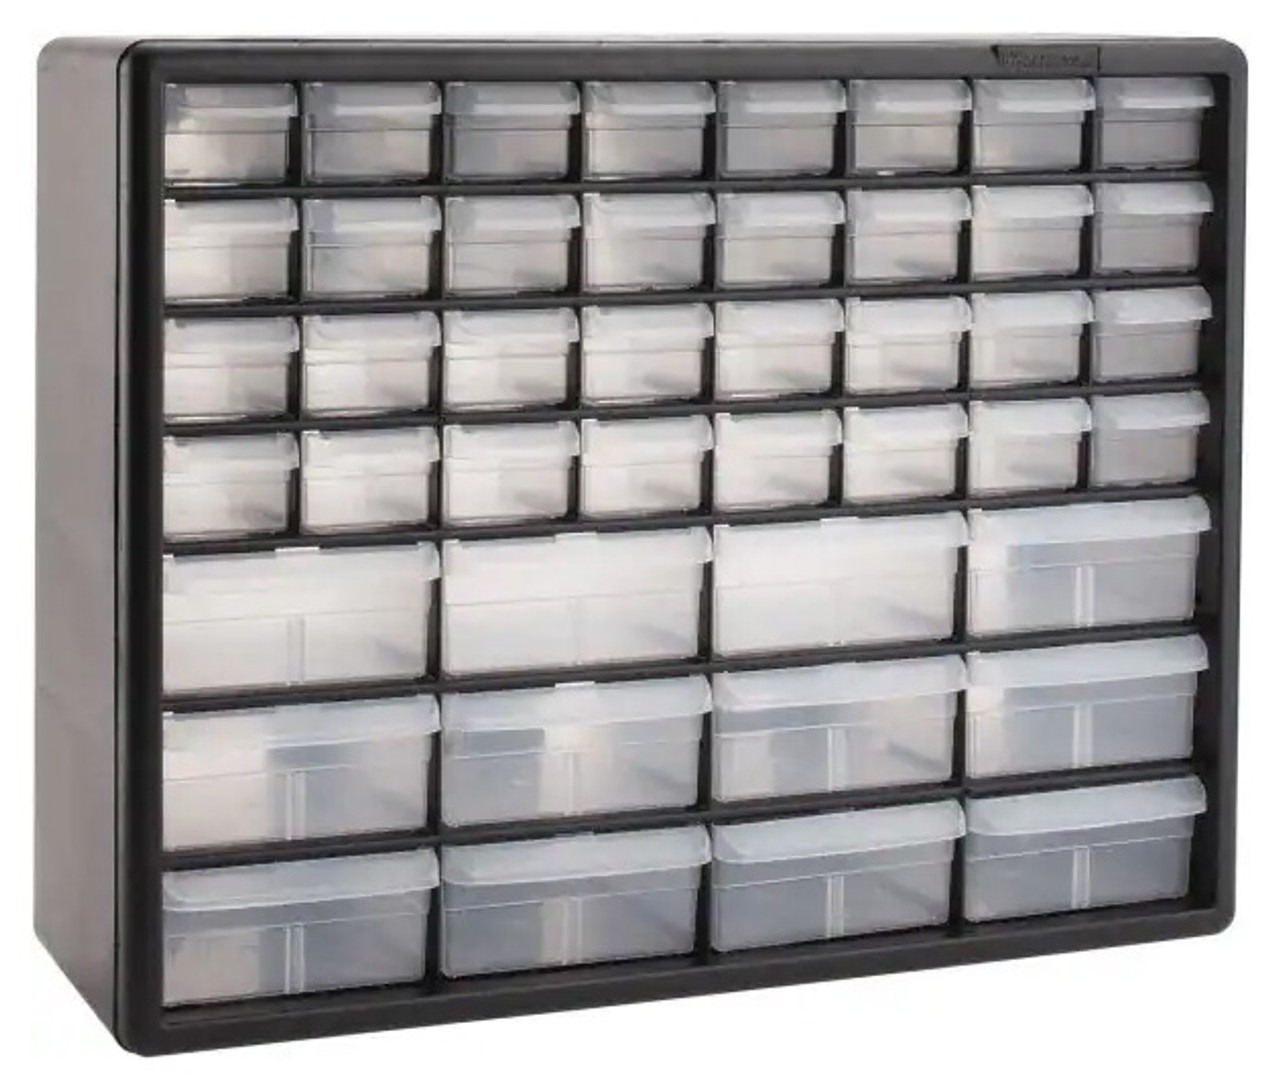 Akro-Mils 10144 44-Drawer Plastic Storage Cabinet for sale online 